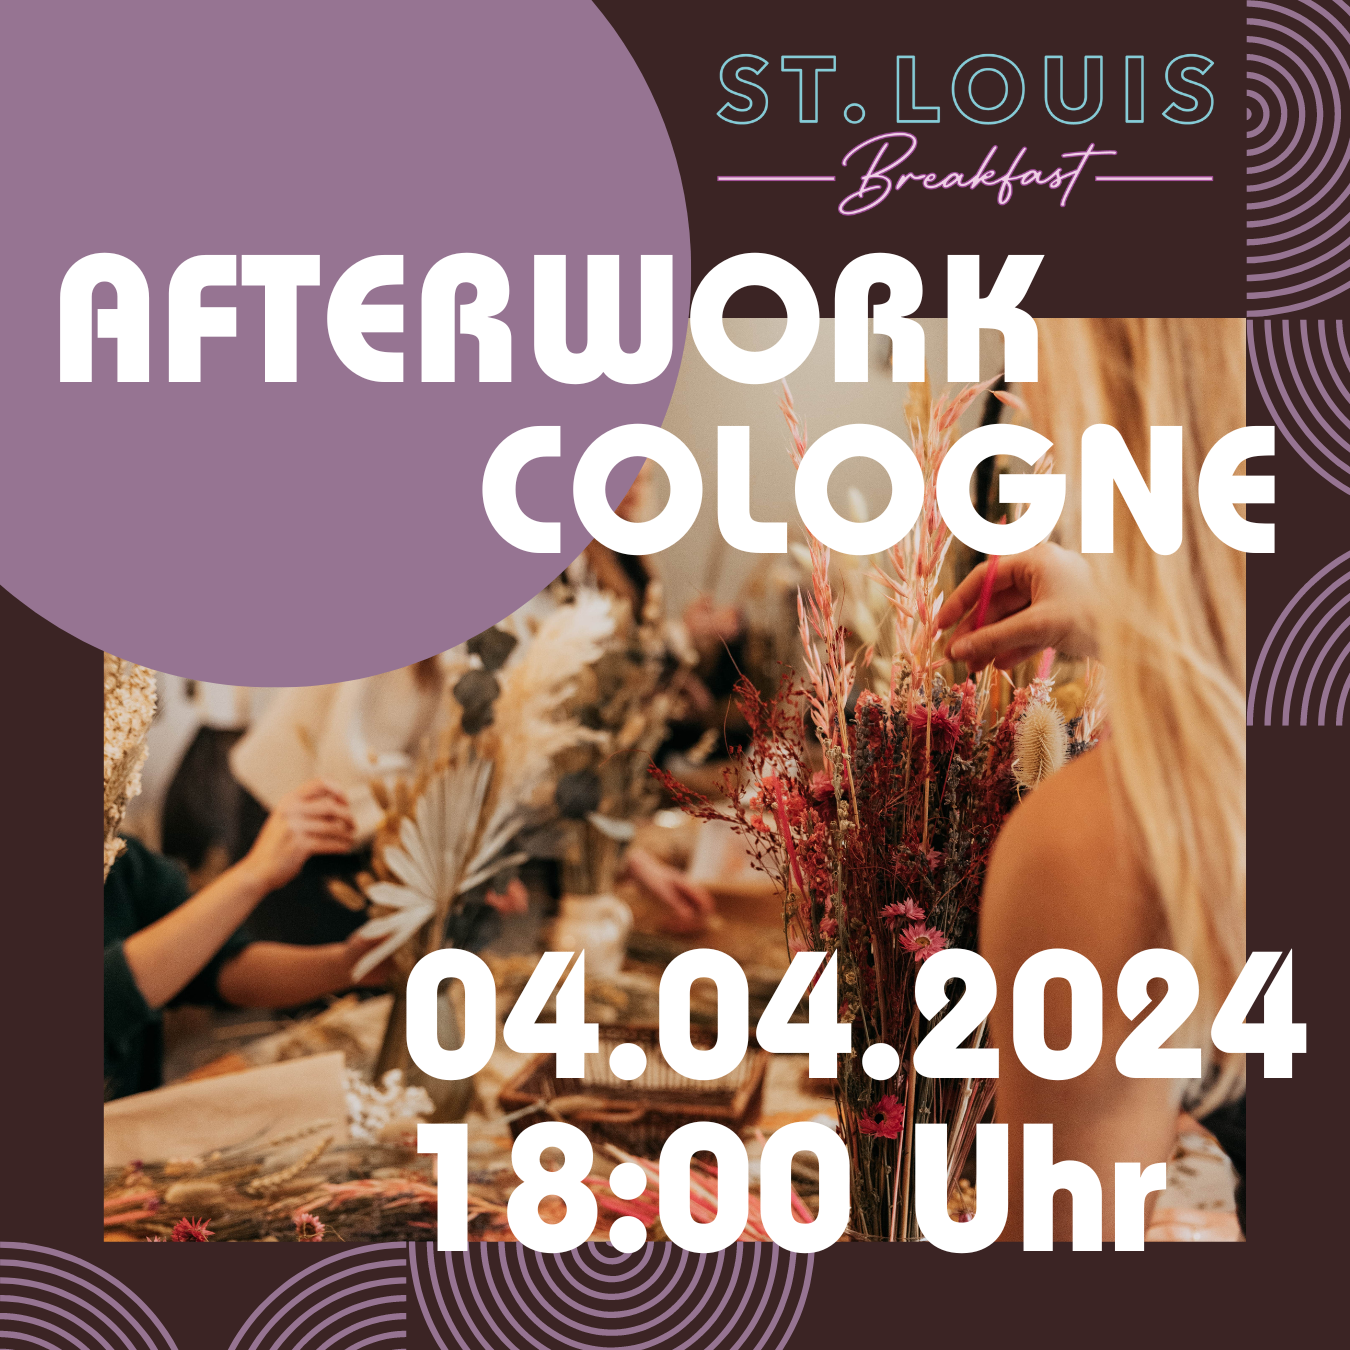 AFTERWORK - Trockenblumenbouquet Workshop ST.LOUIS Breakfast Köln 04.04.2024 18 Uhr